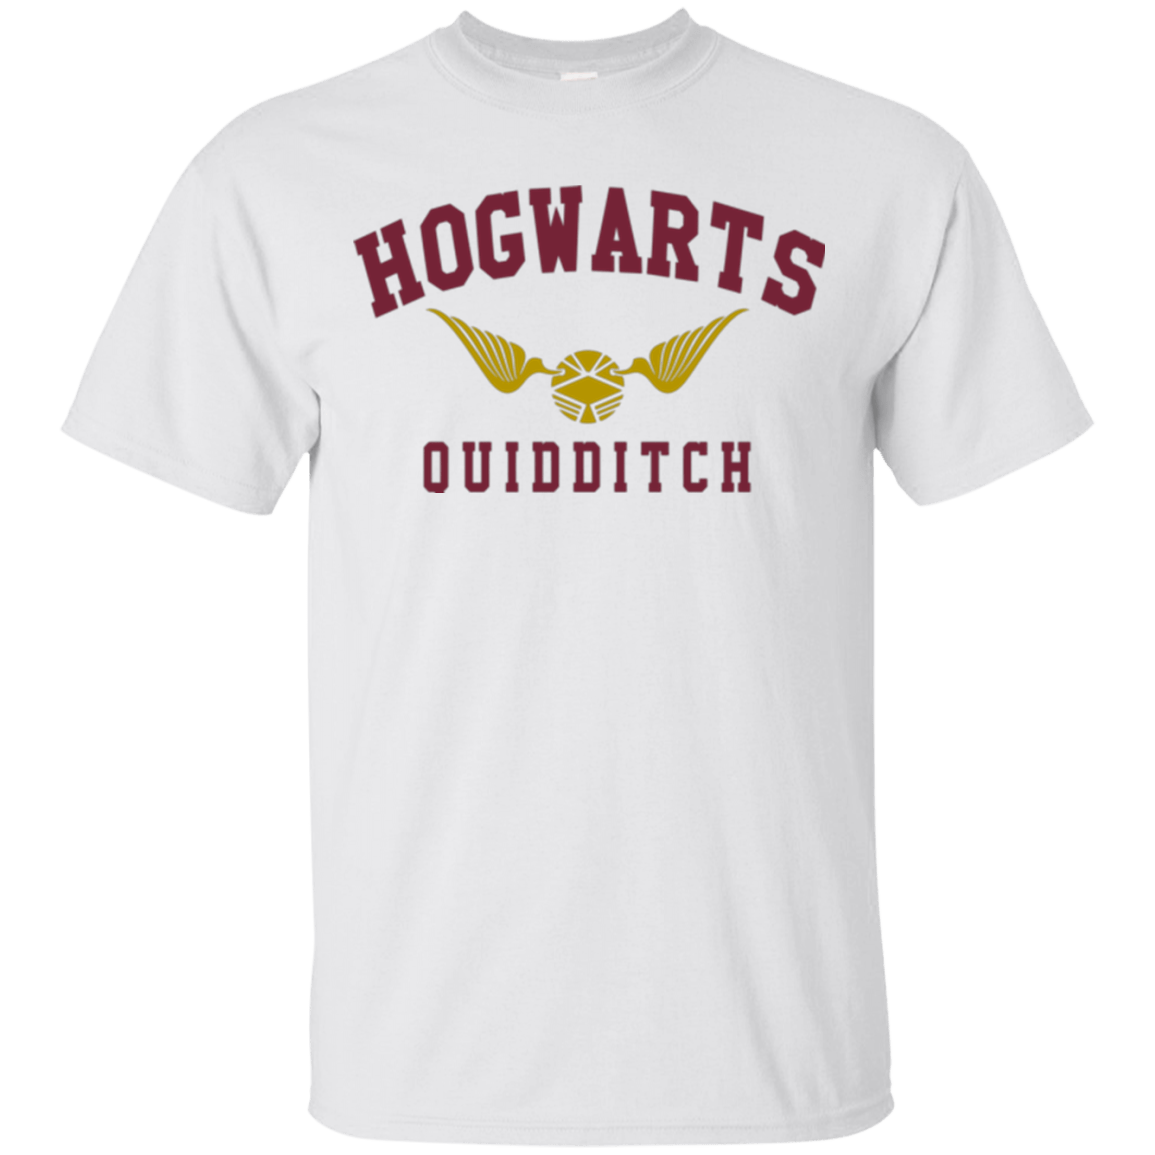 T-Shirts White / Small Hogwarts Quidditch T-Shirt